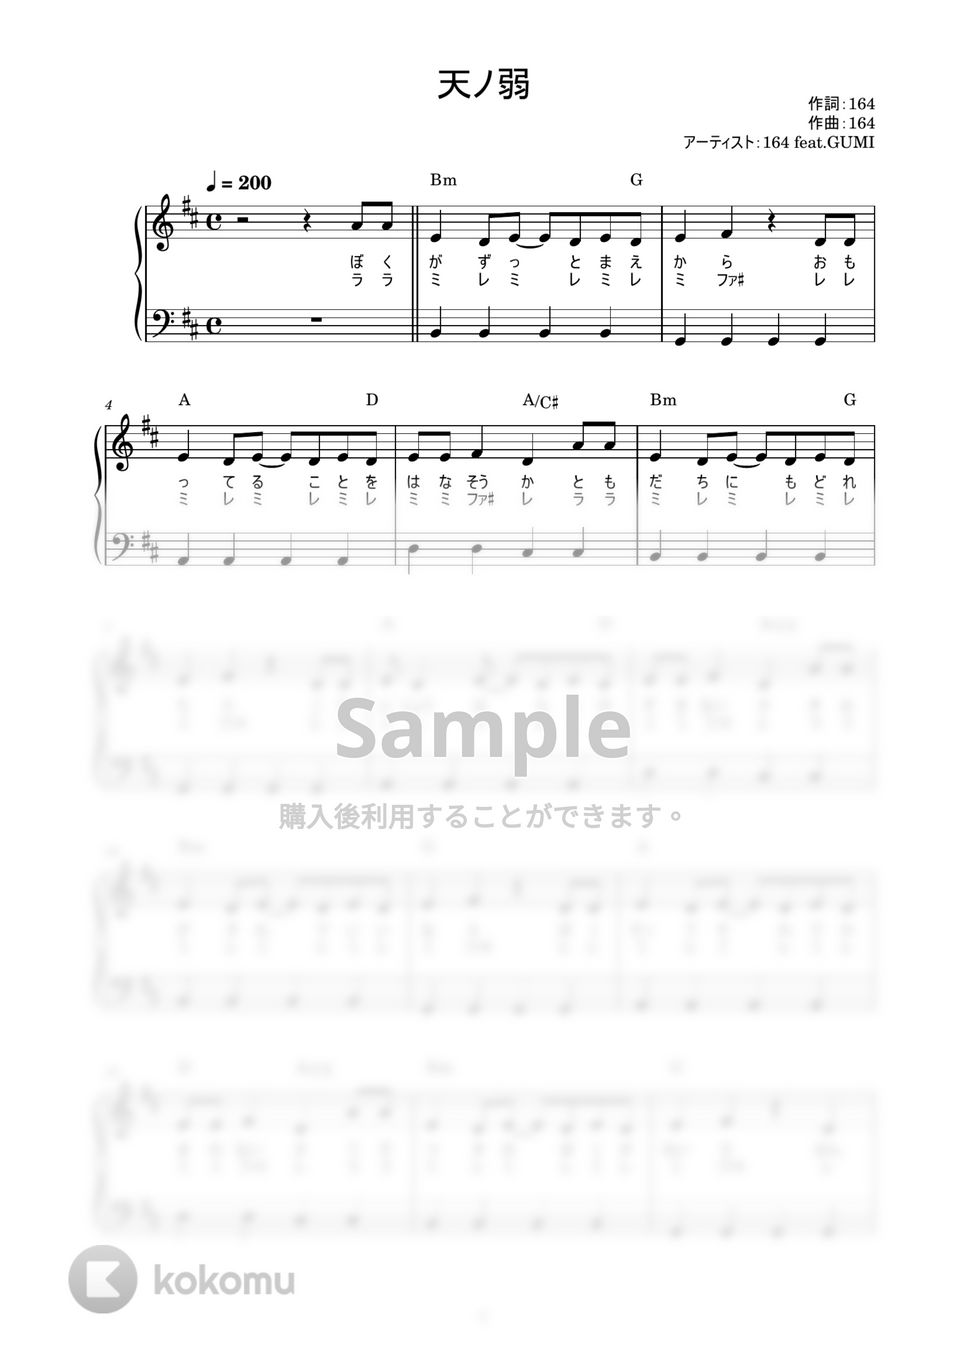 164 feat.GUMI - 天ノ弱 (かんたん / 歌詞付き / ドレミ付き / 初心者) by piano.tokyo